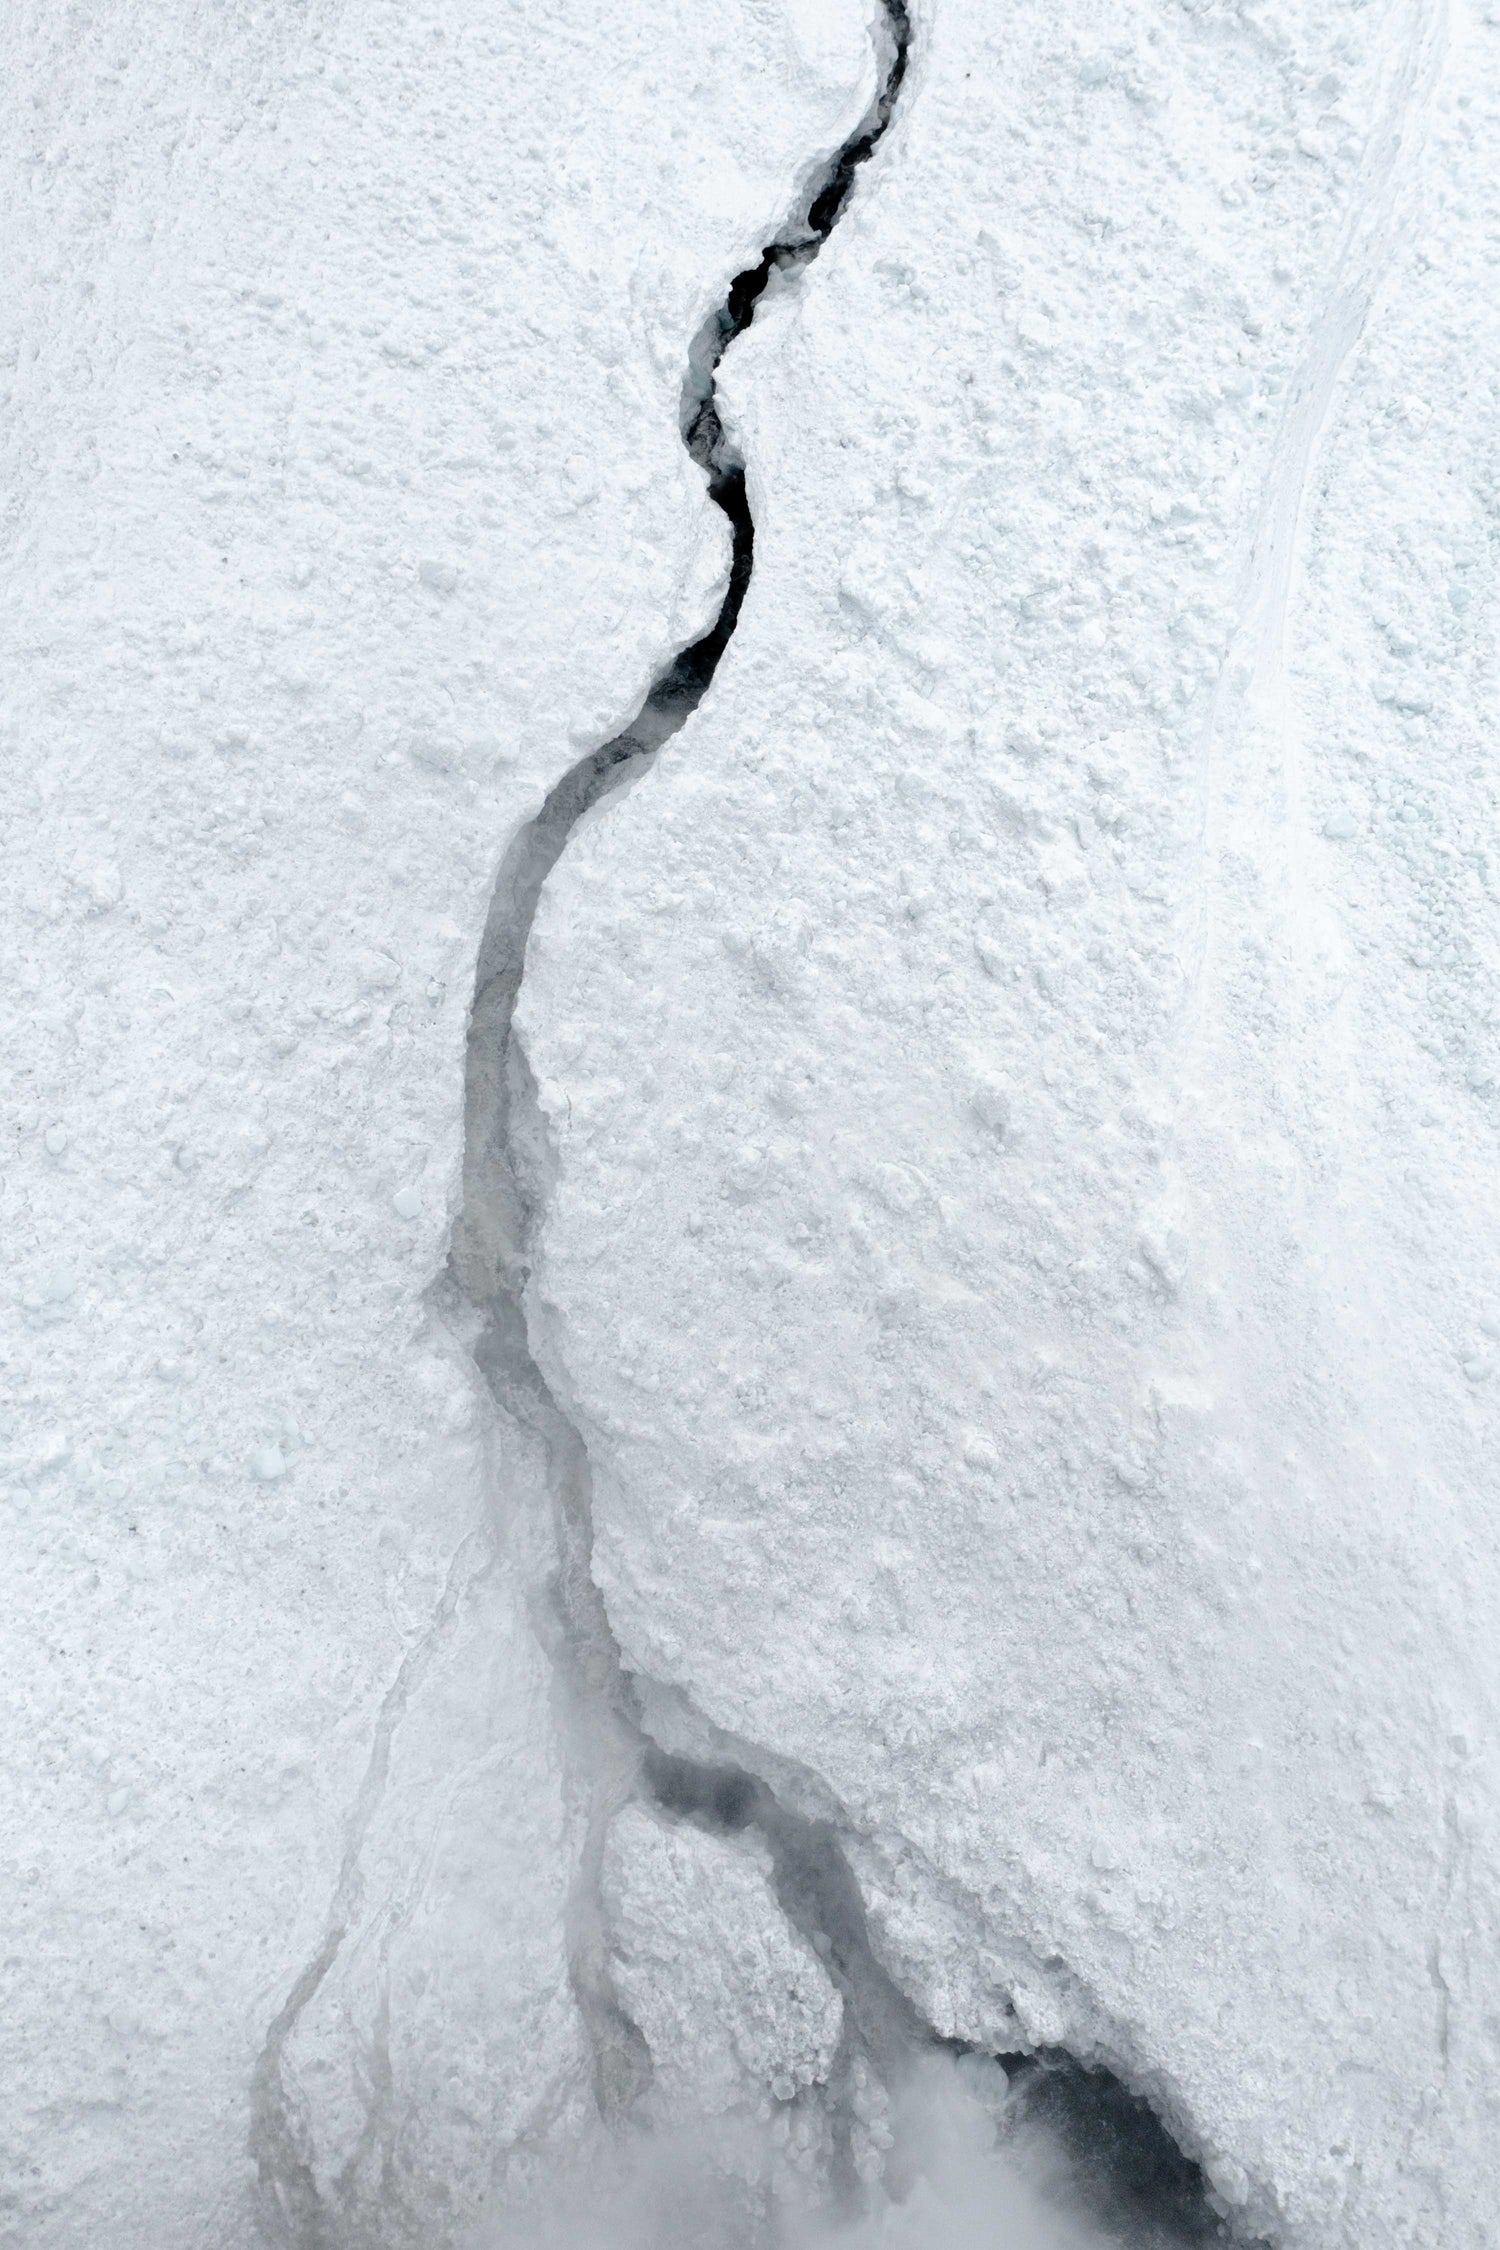 A crack in the glacier ice